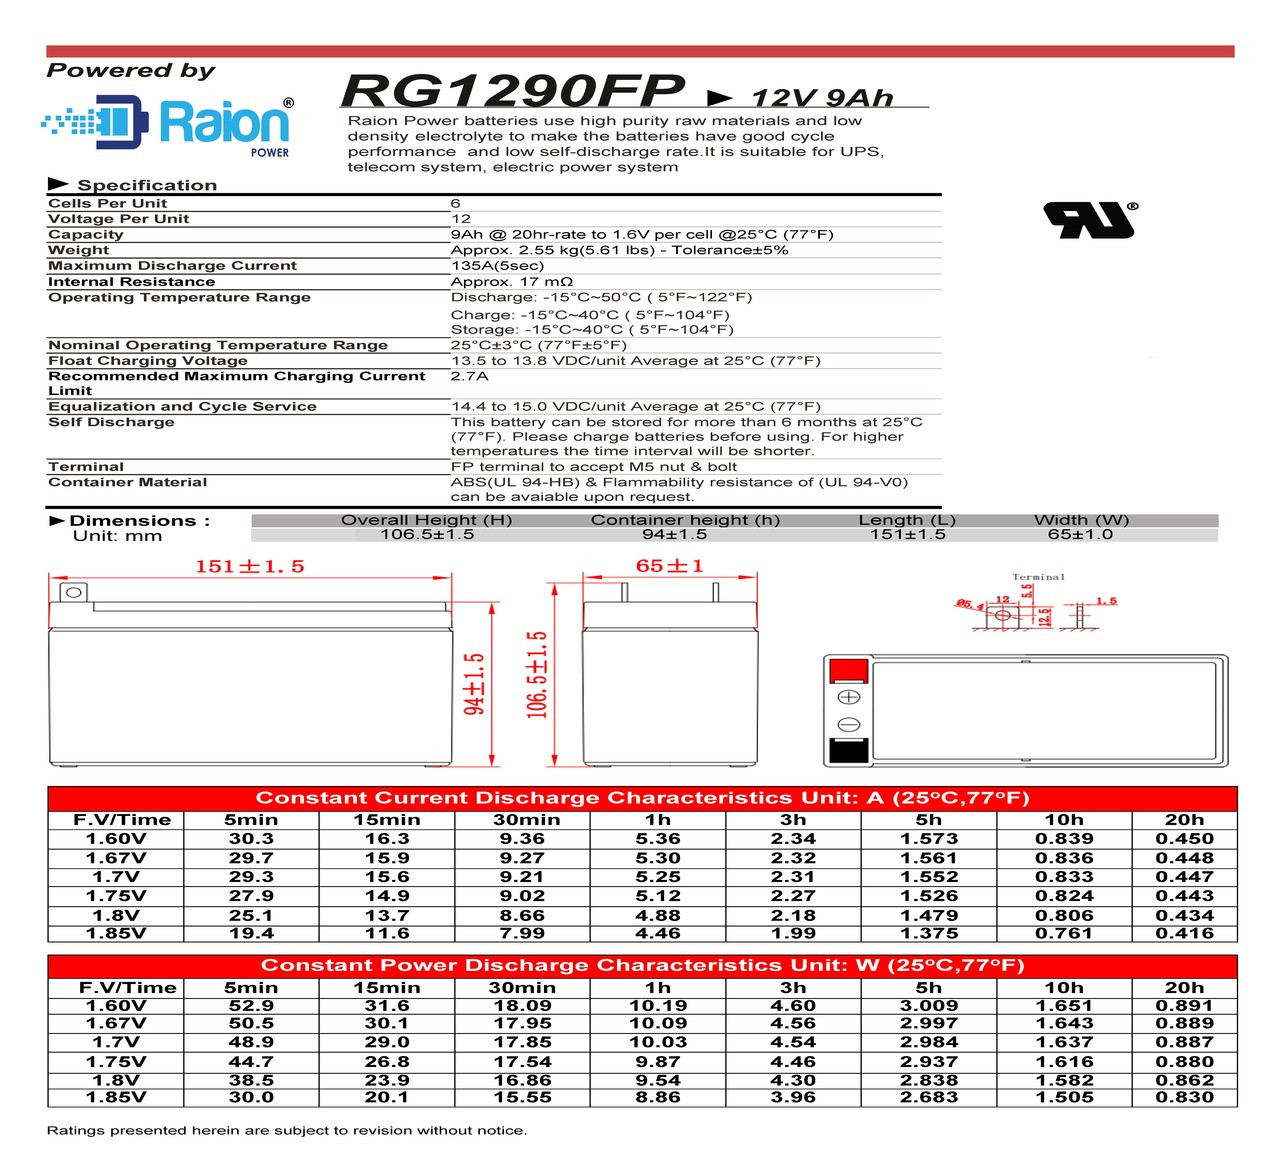 Raion Power 12V 9Ah Battery Data Sheet for Rally 7620 Boost-it 350